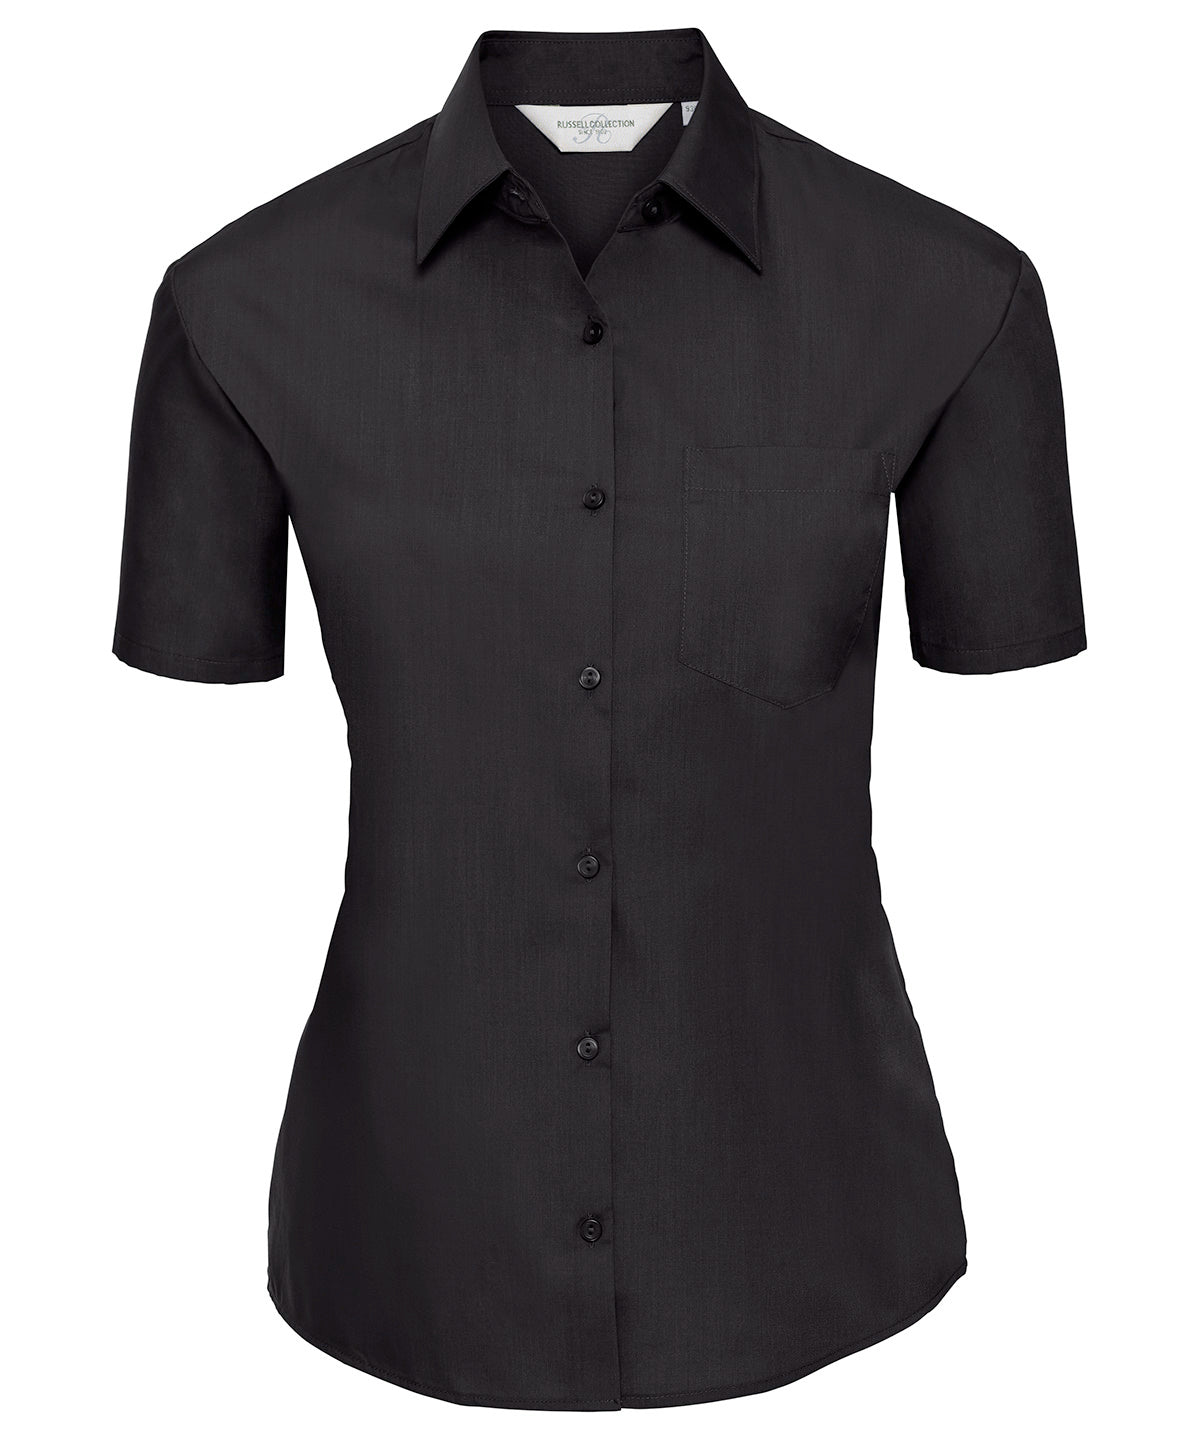 Women's Short Sleeve Polycotton Easycare Poplin Shirt